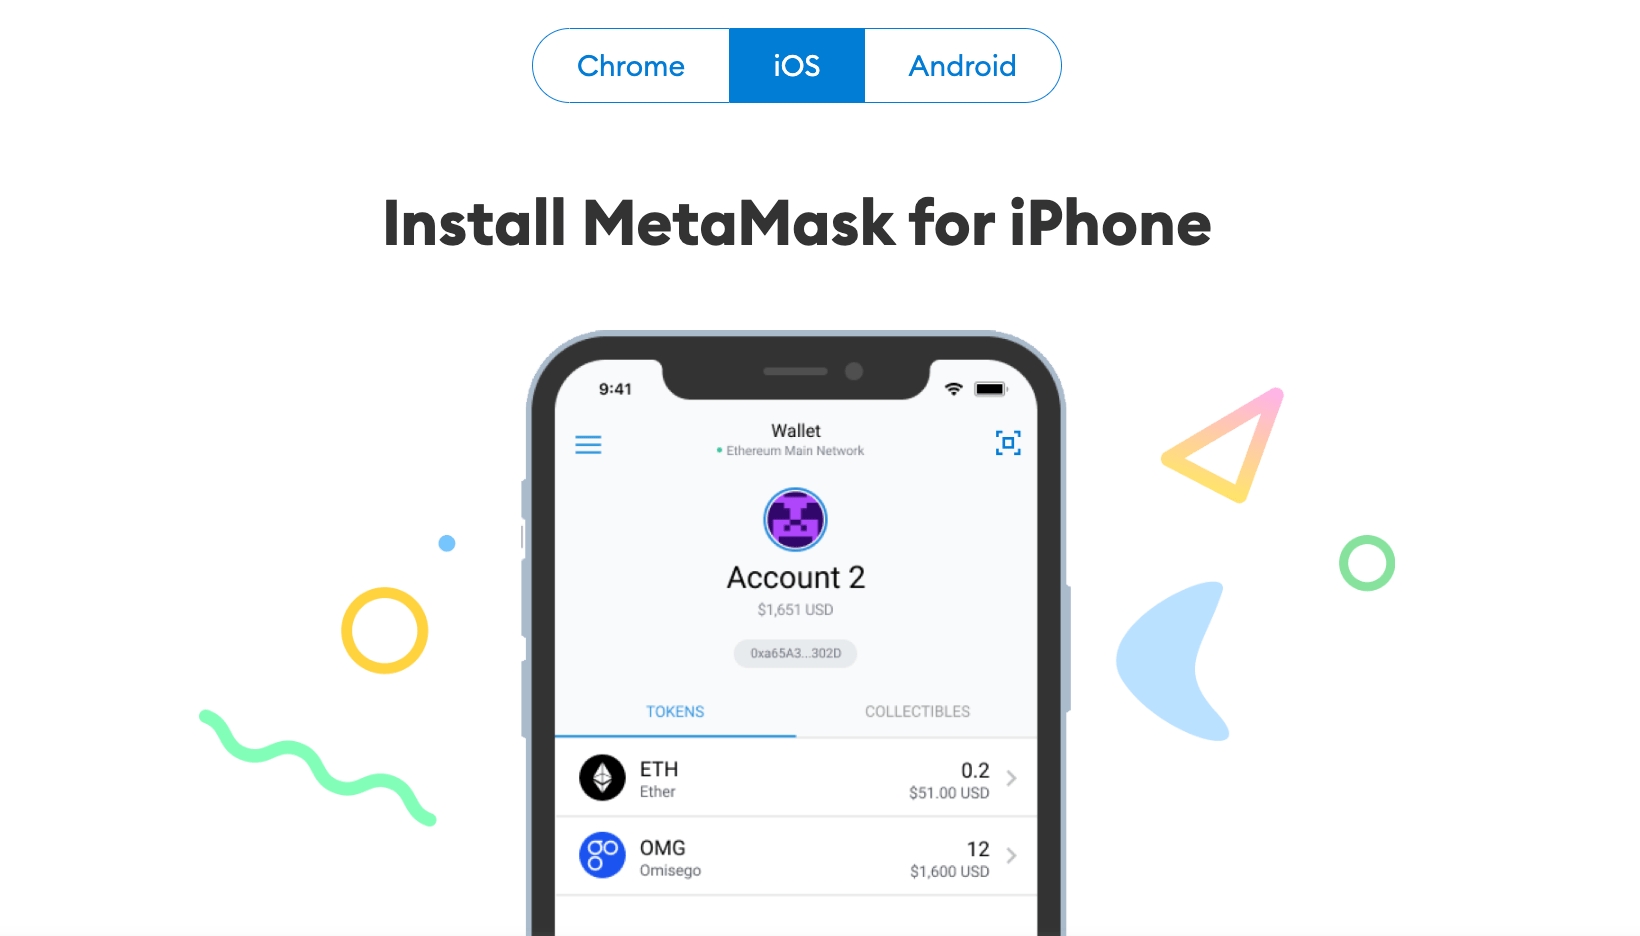 MetaMask For iPhone